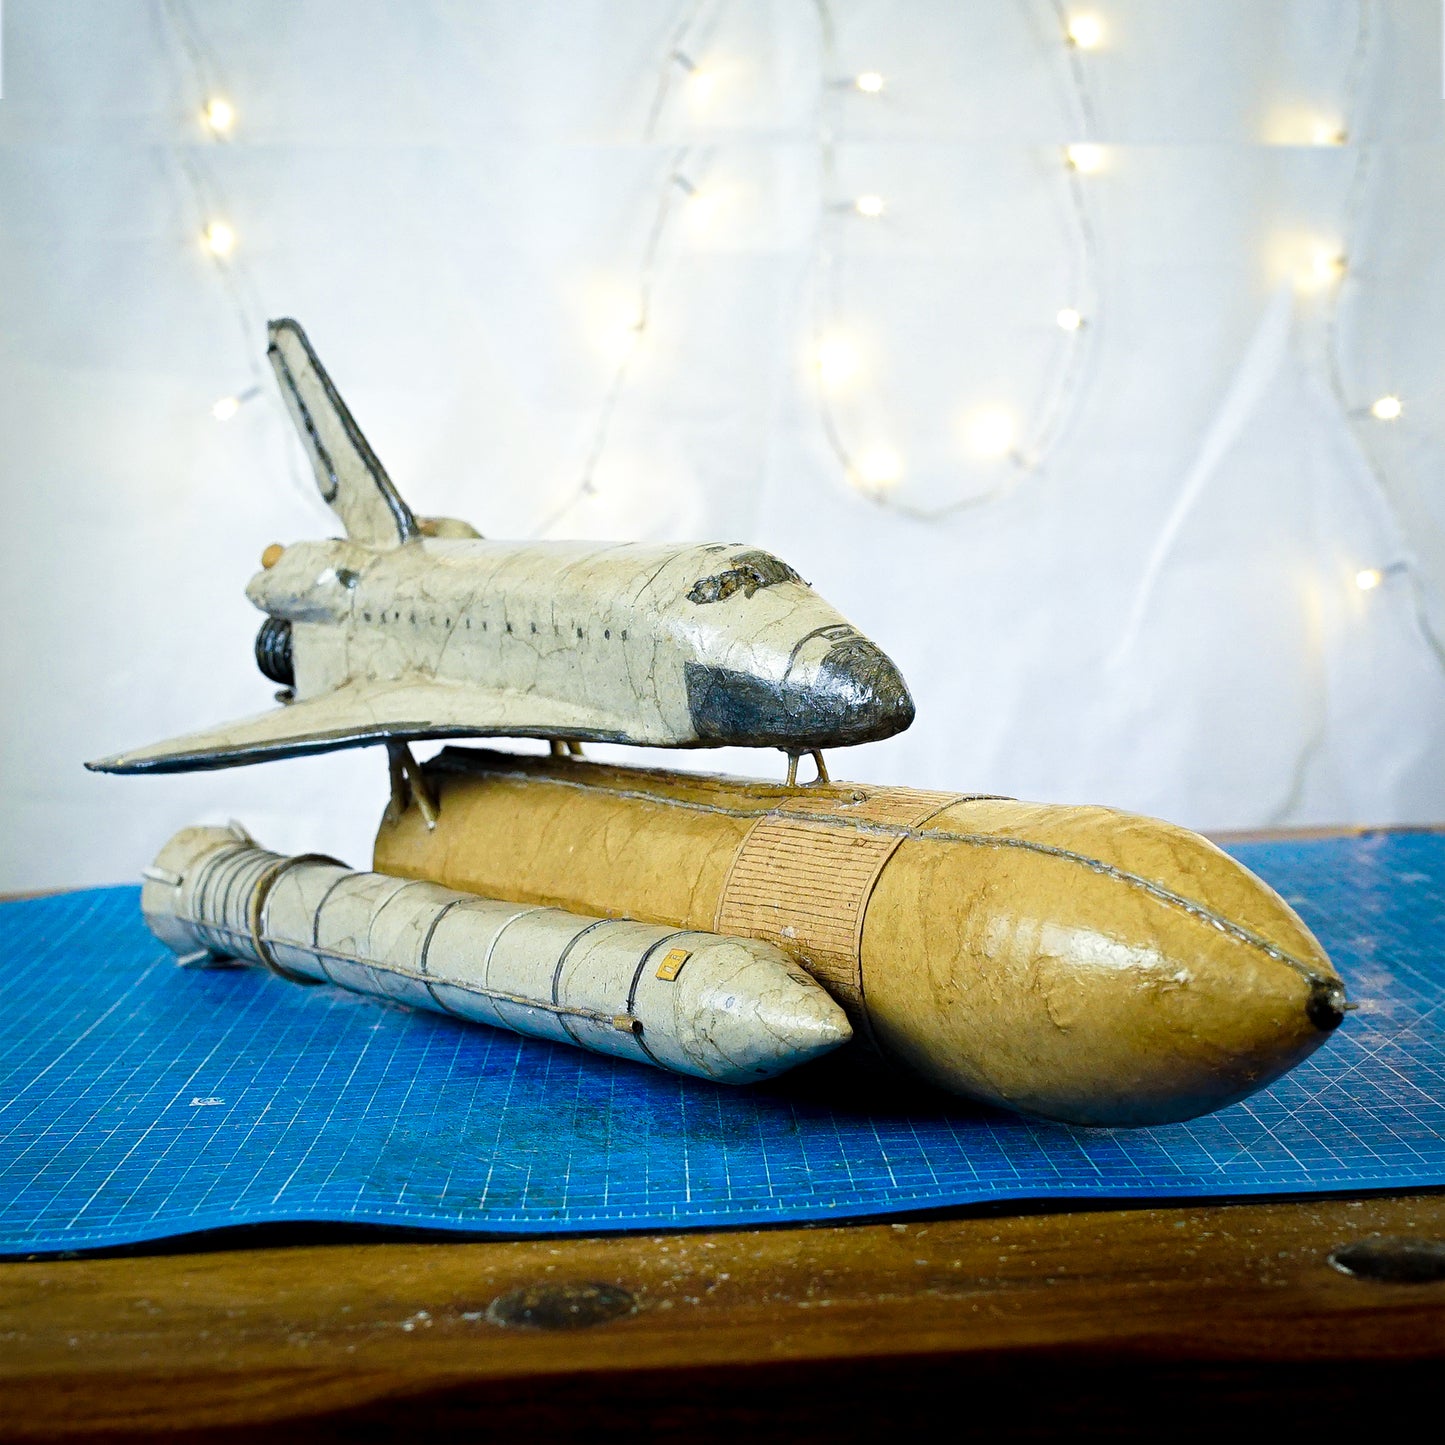 Space Shuttle TEMPLATES for cardboard DIY